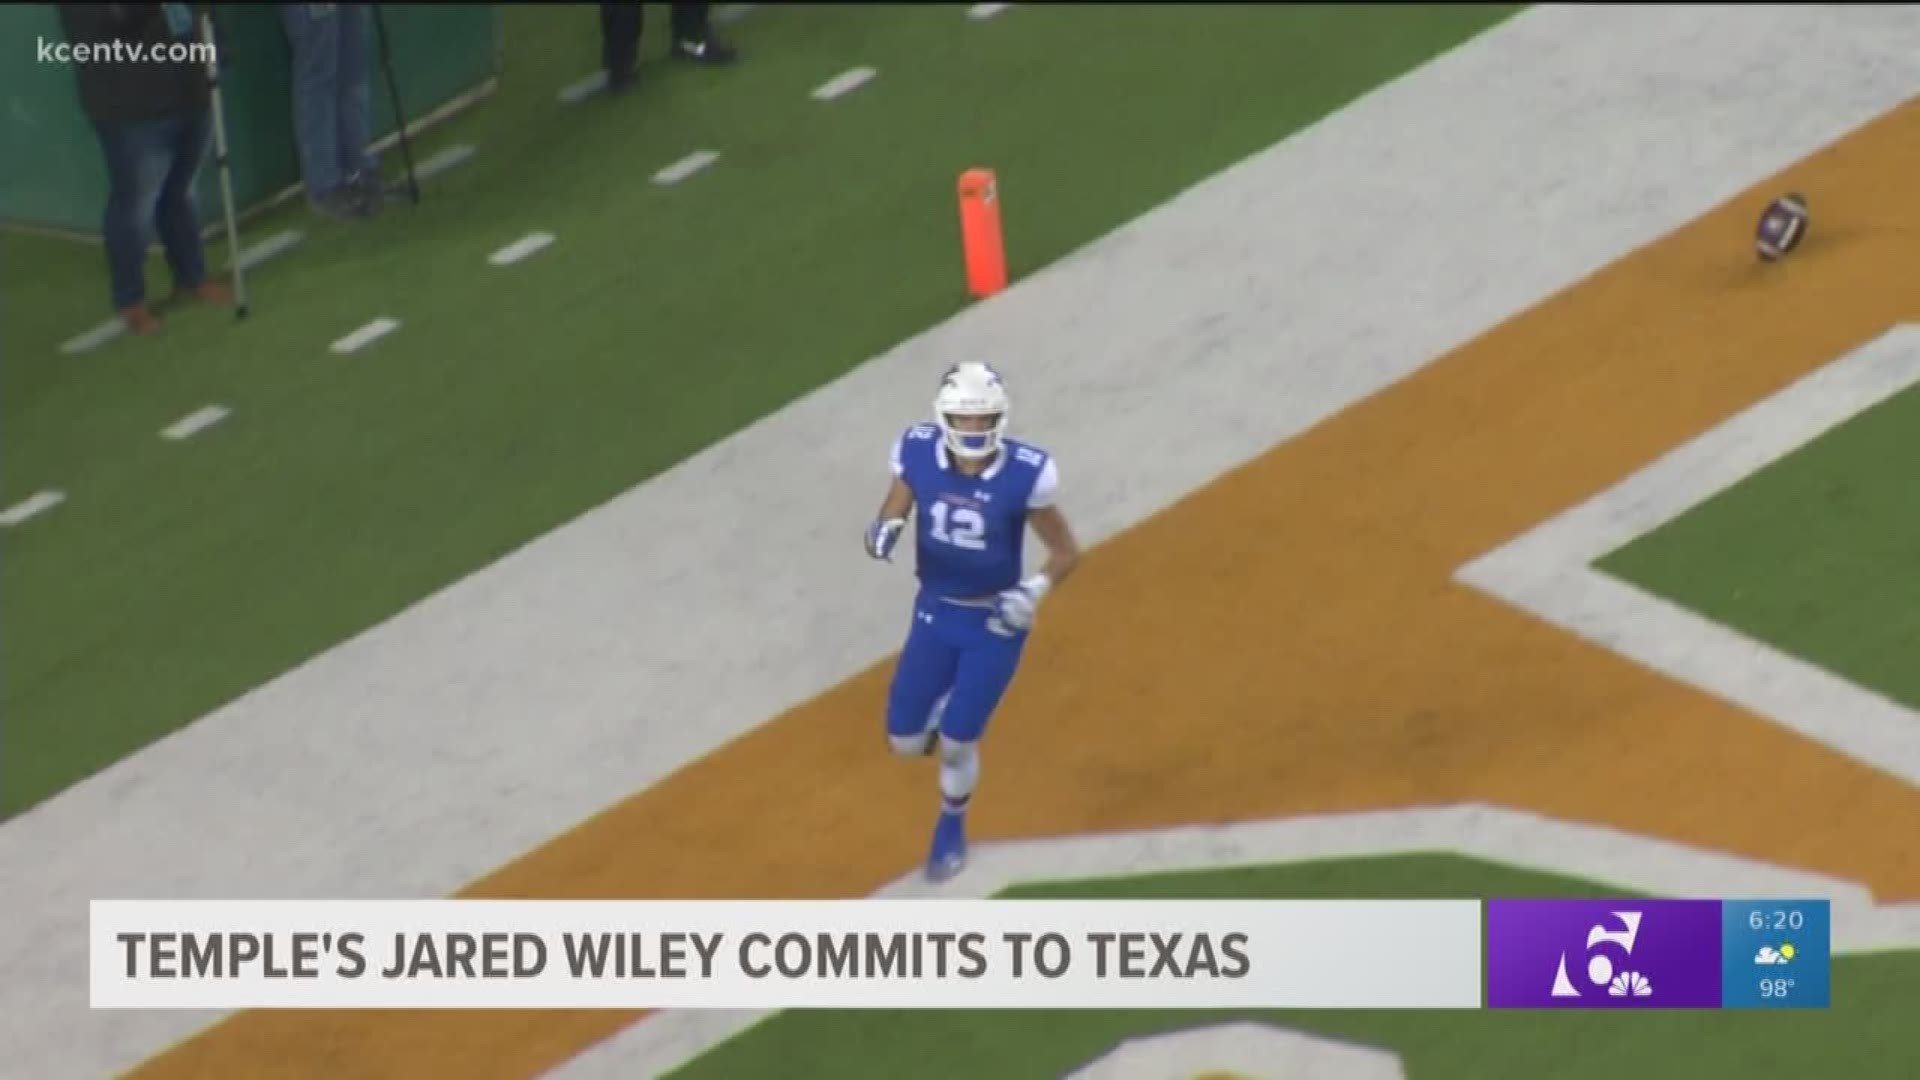 Wiley chose UT over the University of Houston 